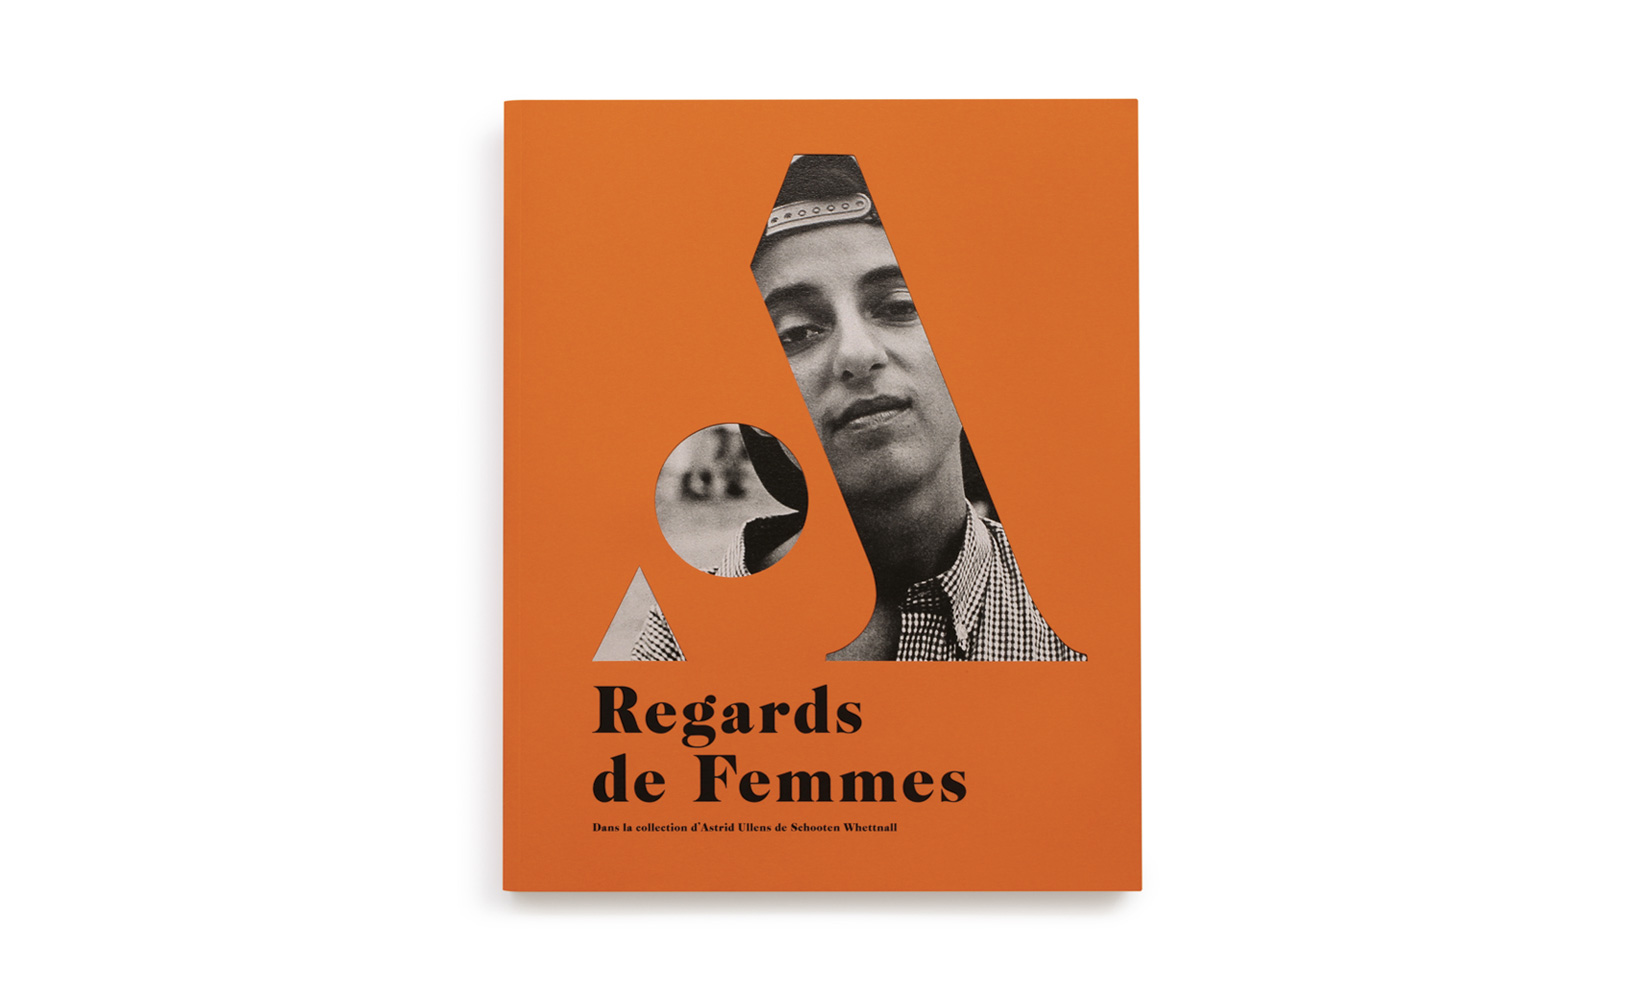 REGARDS-DE-FEMMES-OLIVIER-ANDREOTTI-TOLUCA-STUDIO-01.jpg